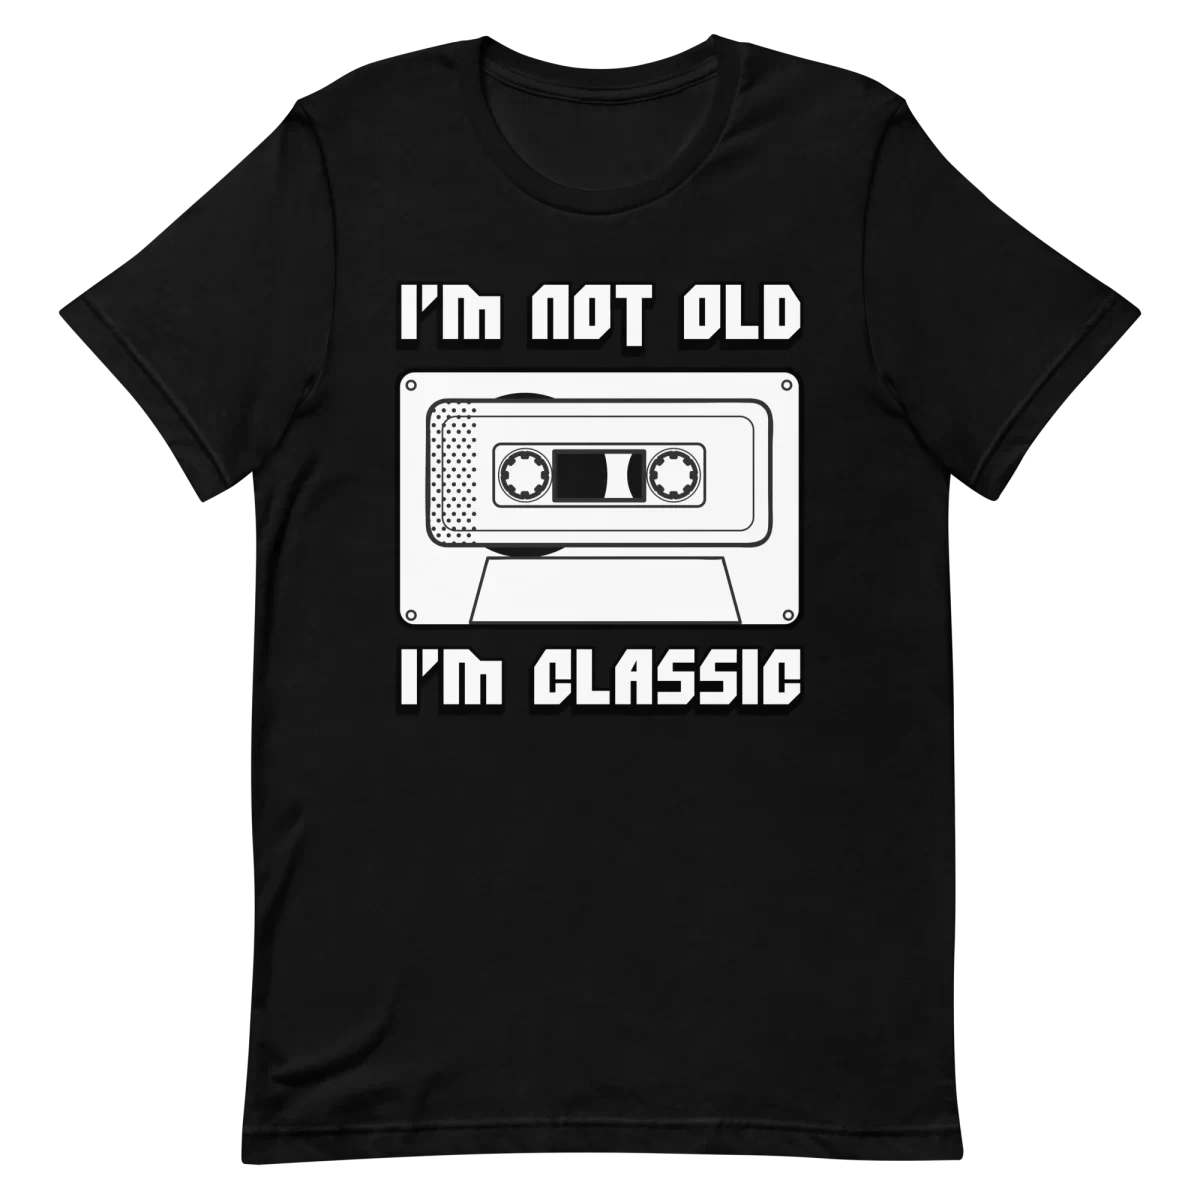 Unisex T-Shirt - I'm Not Old I'm Classic - Black